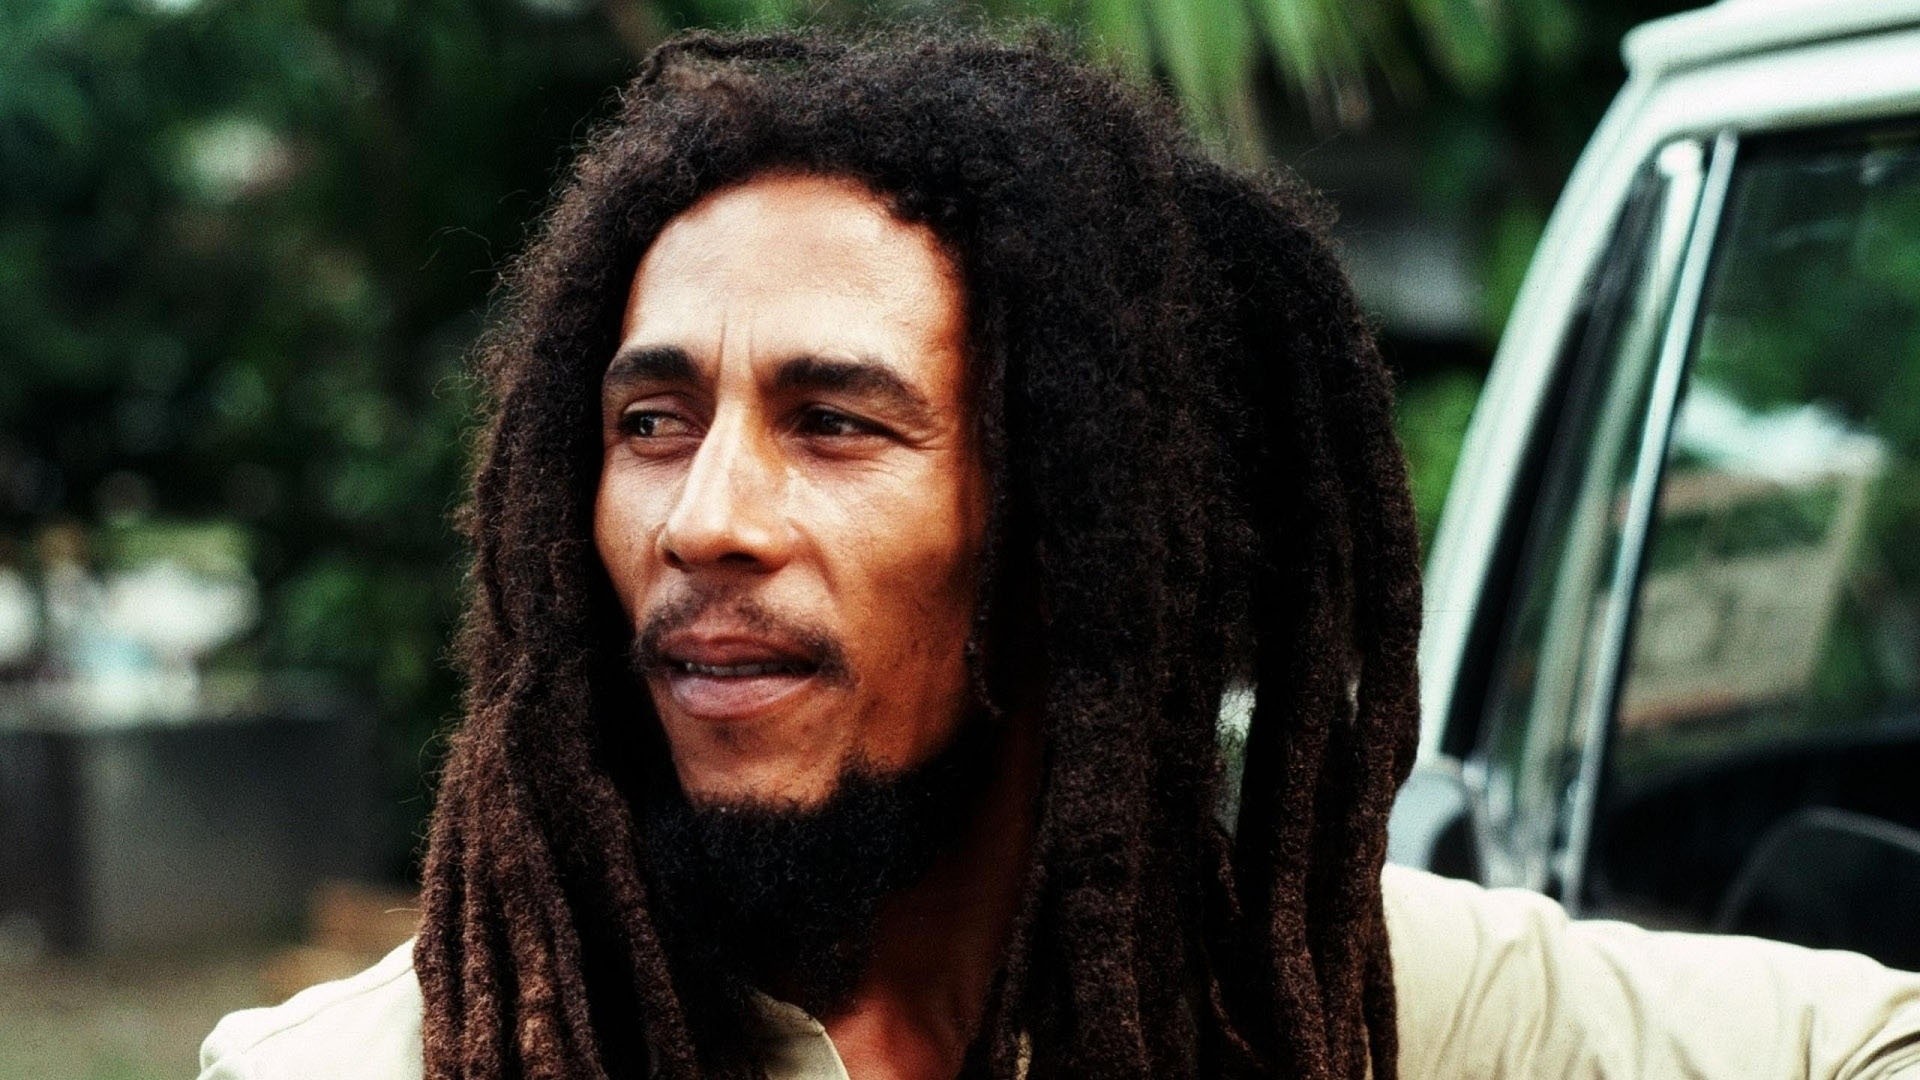 Bob Marley wallpaper ·① Download free beautiful ...